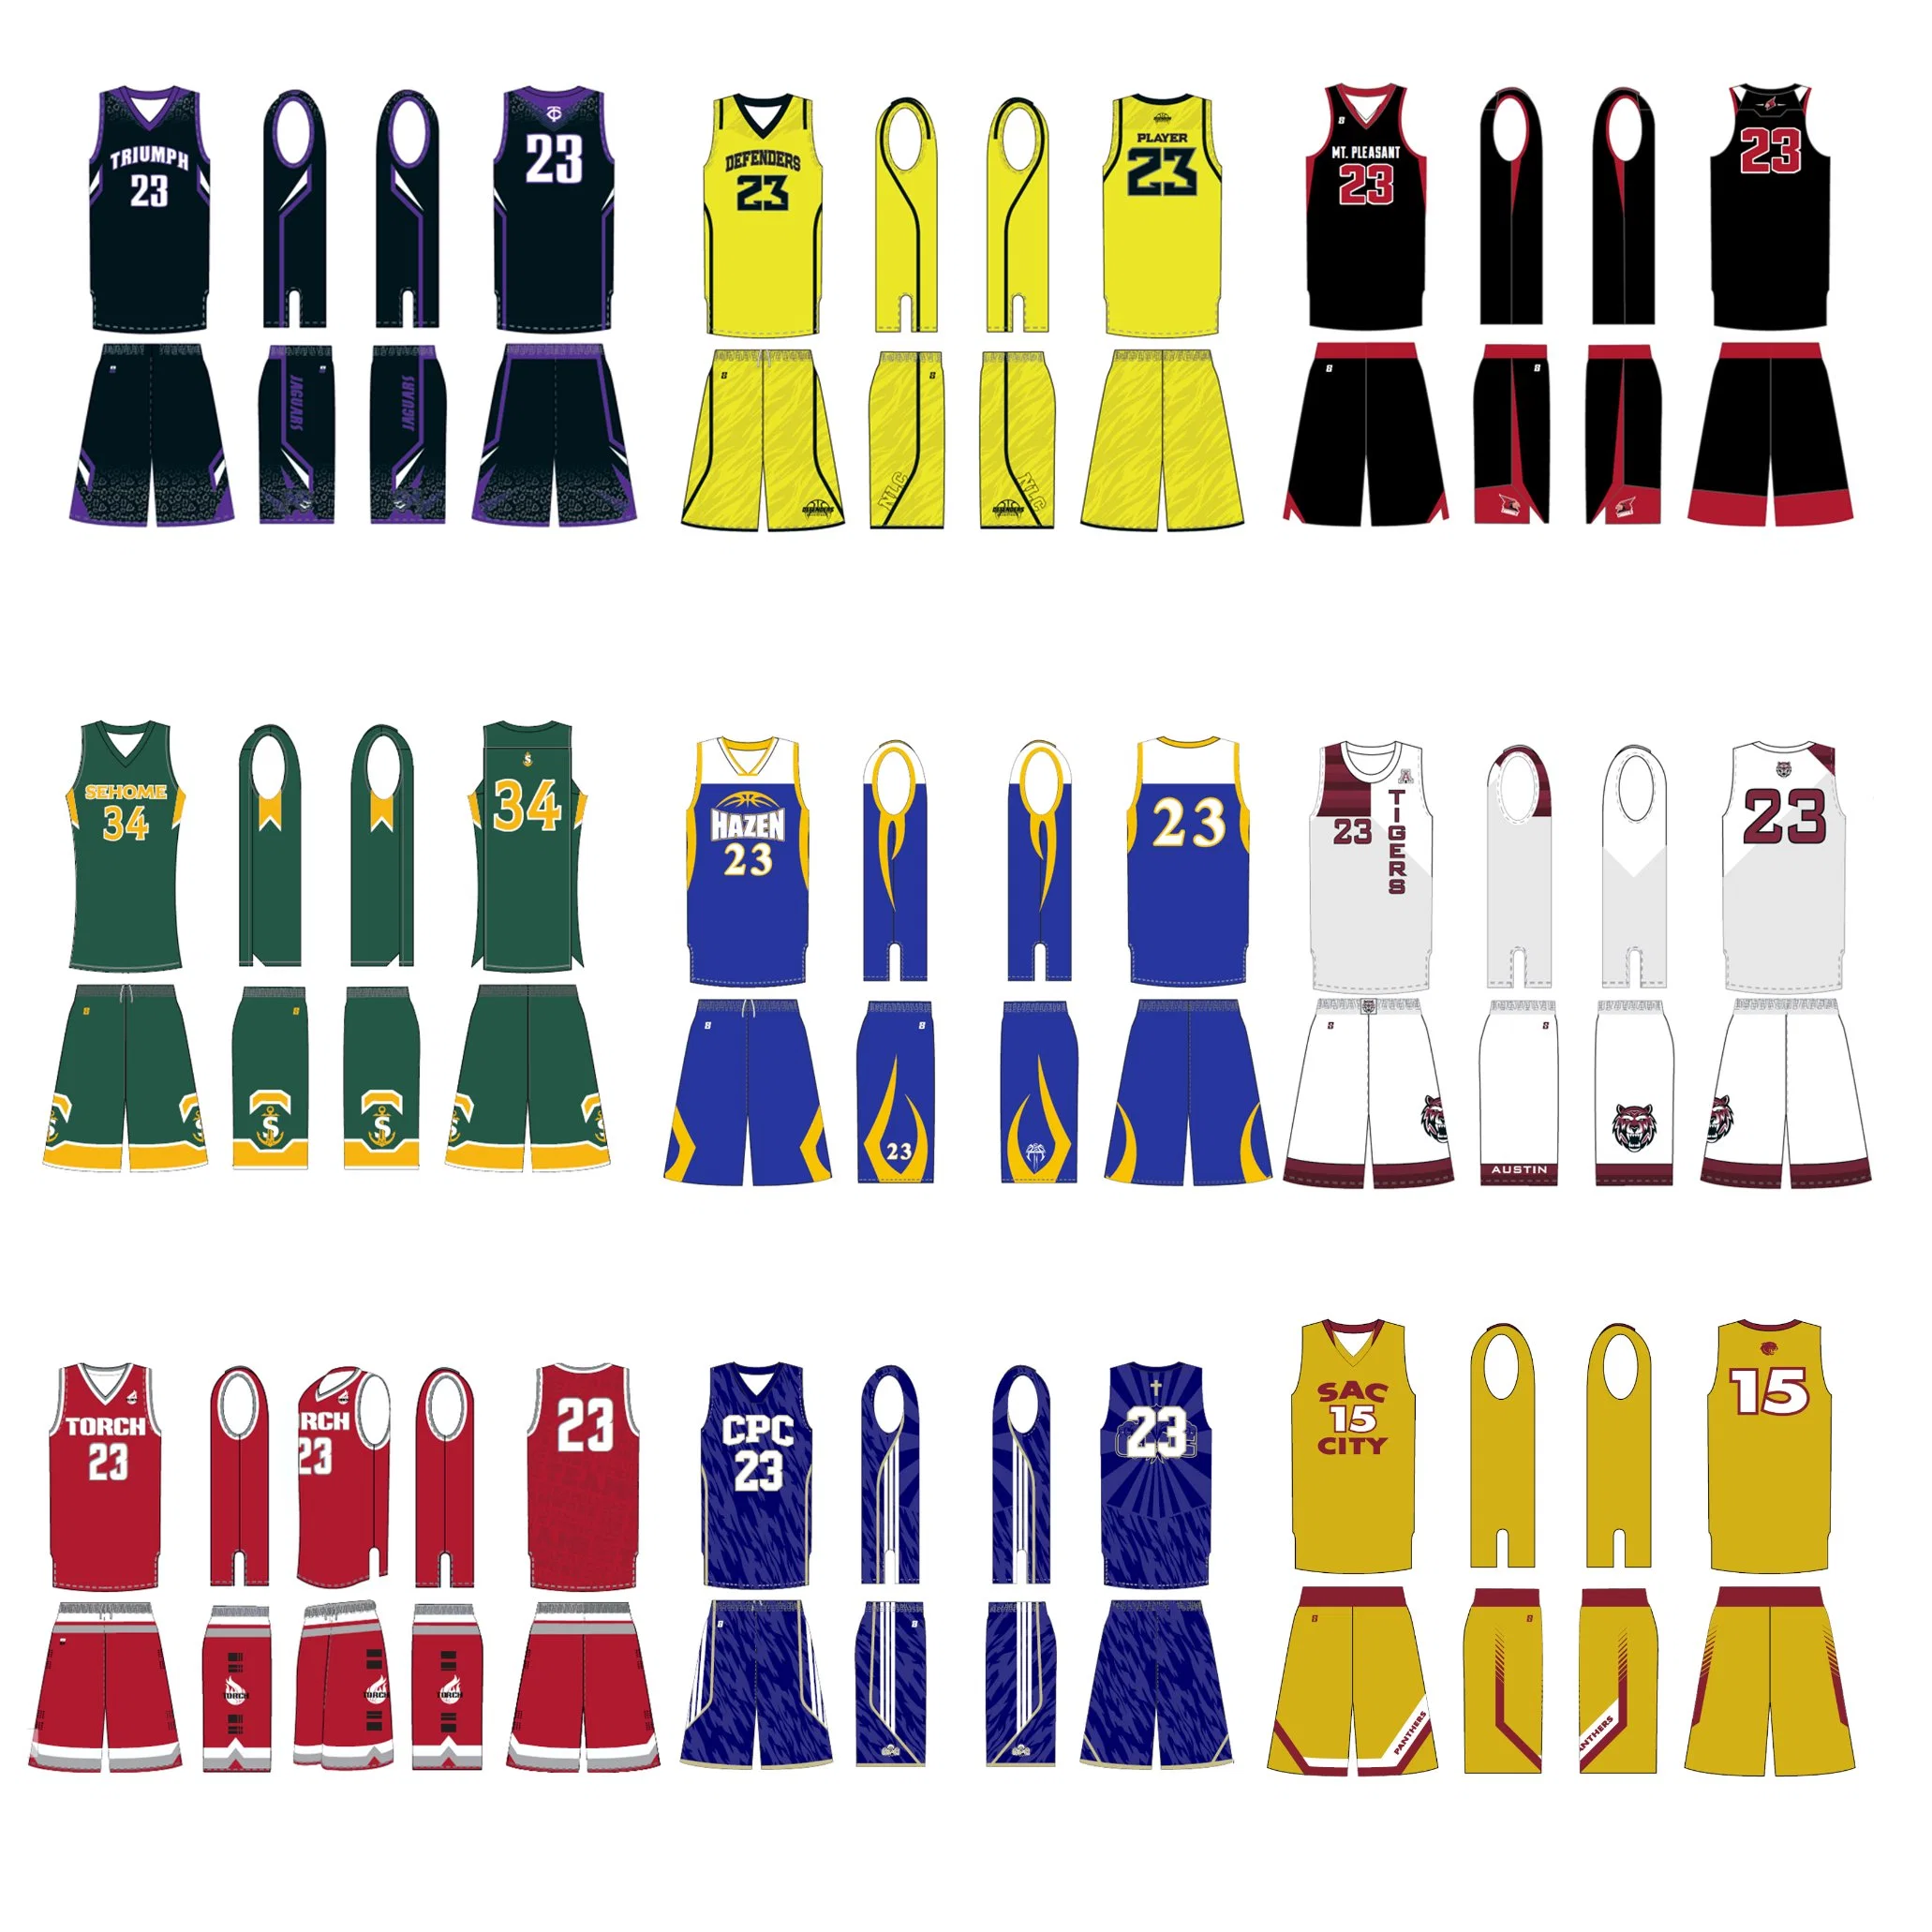 Latest Sublimation Reversible Basketball Jersey Customized Design Basketball Uniforms Sublimated Sportswear